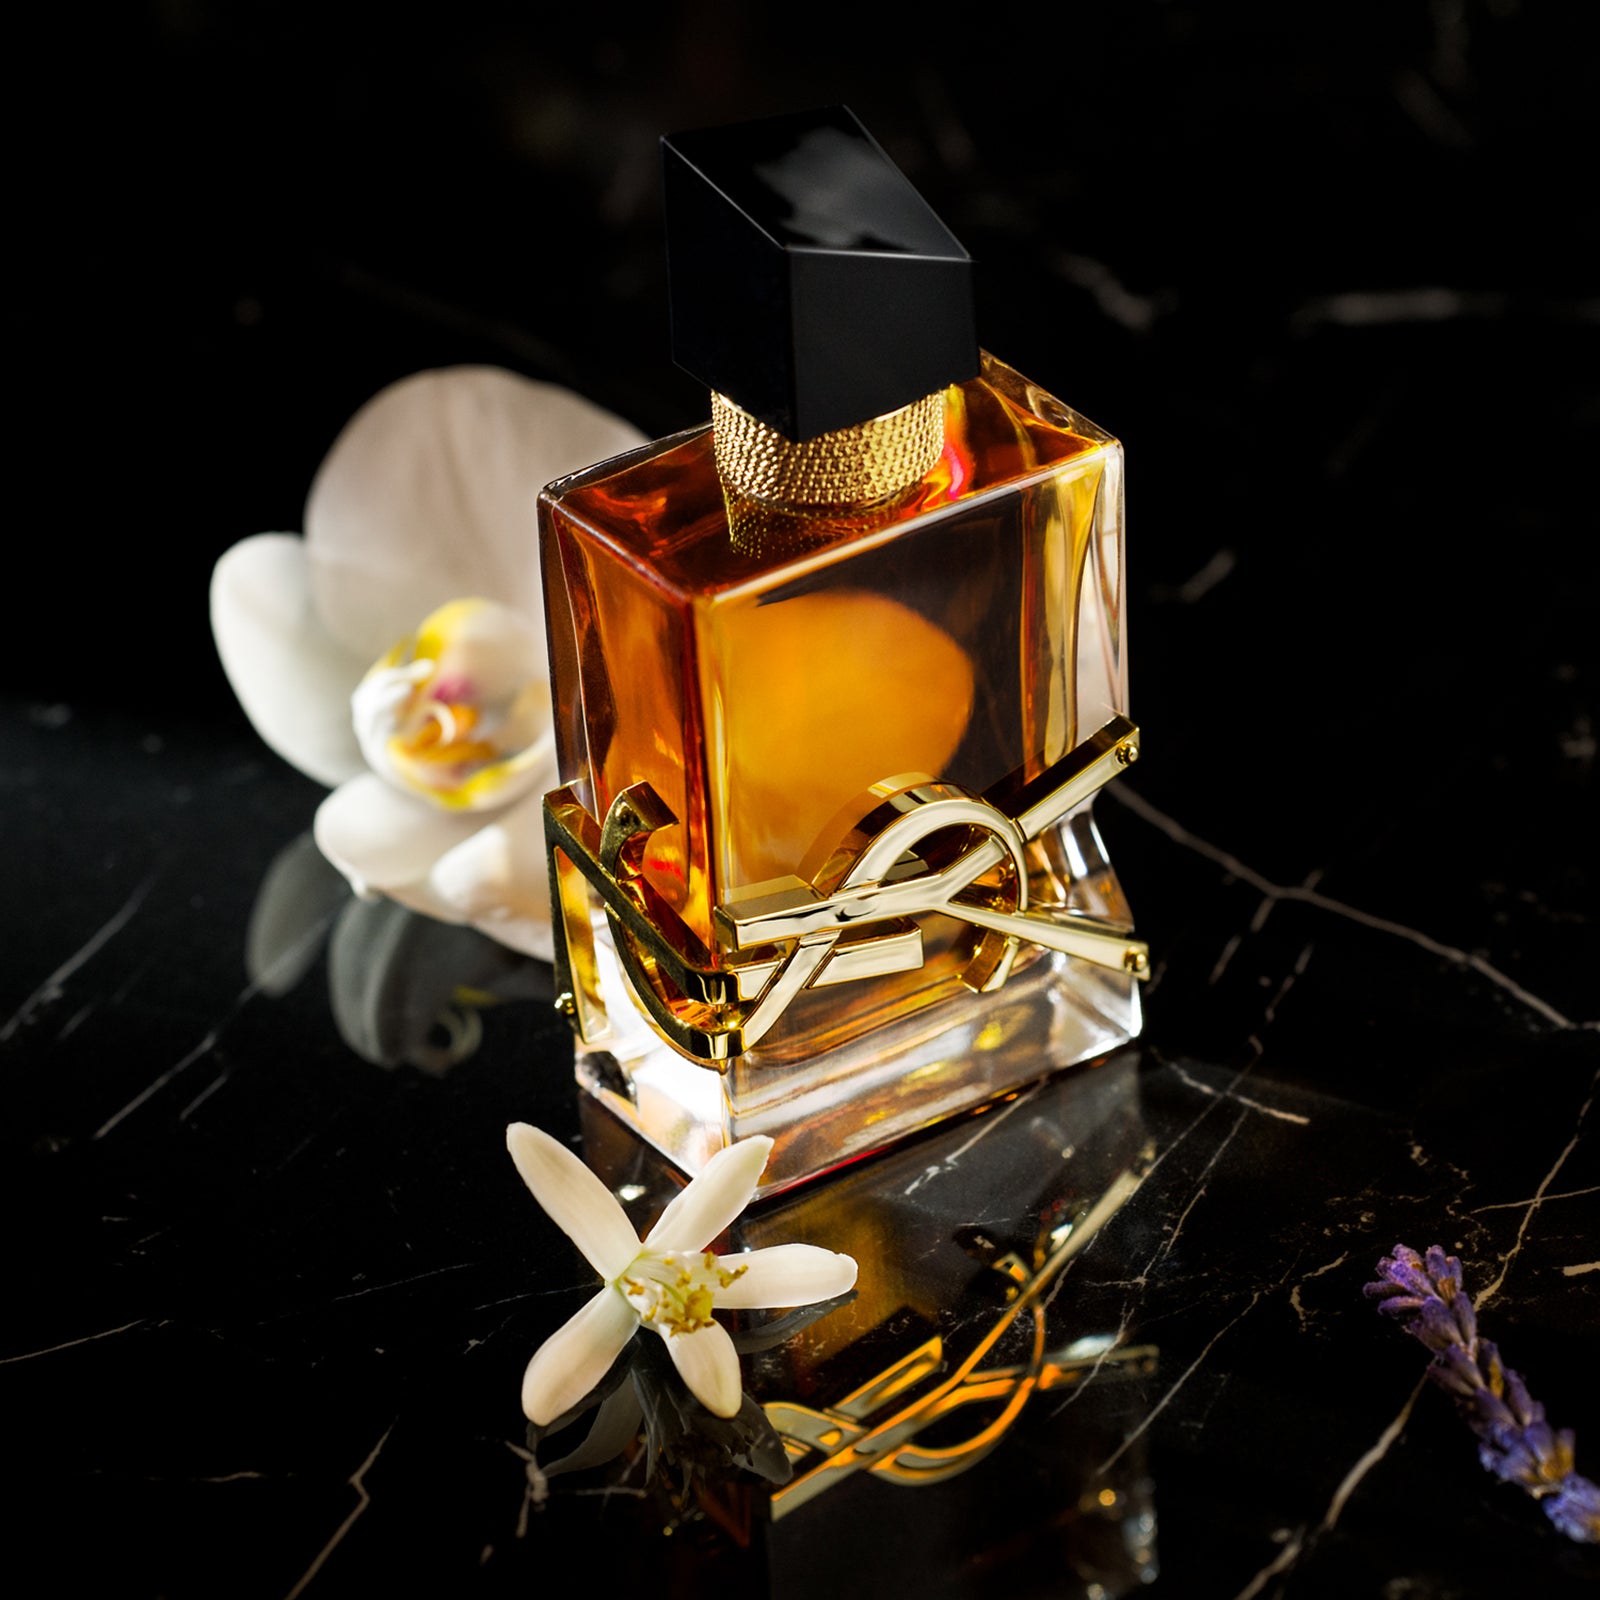 YSL Libre Intense Eau De Parfum for Women – Perfume Gallery